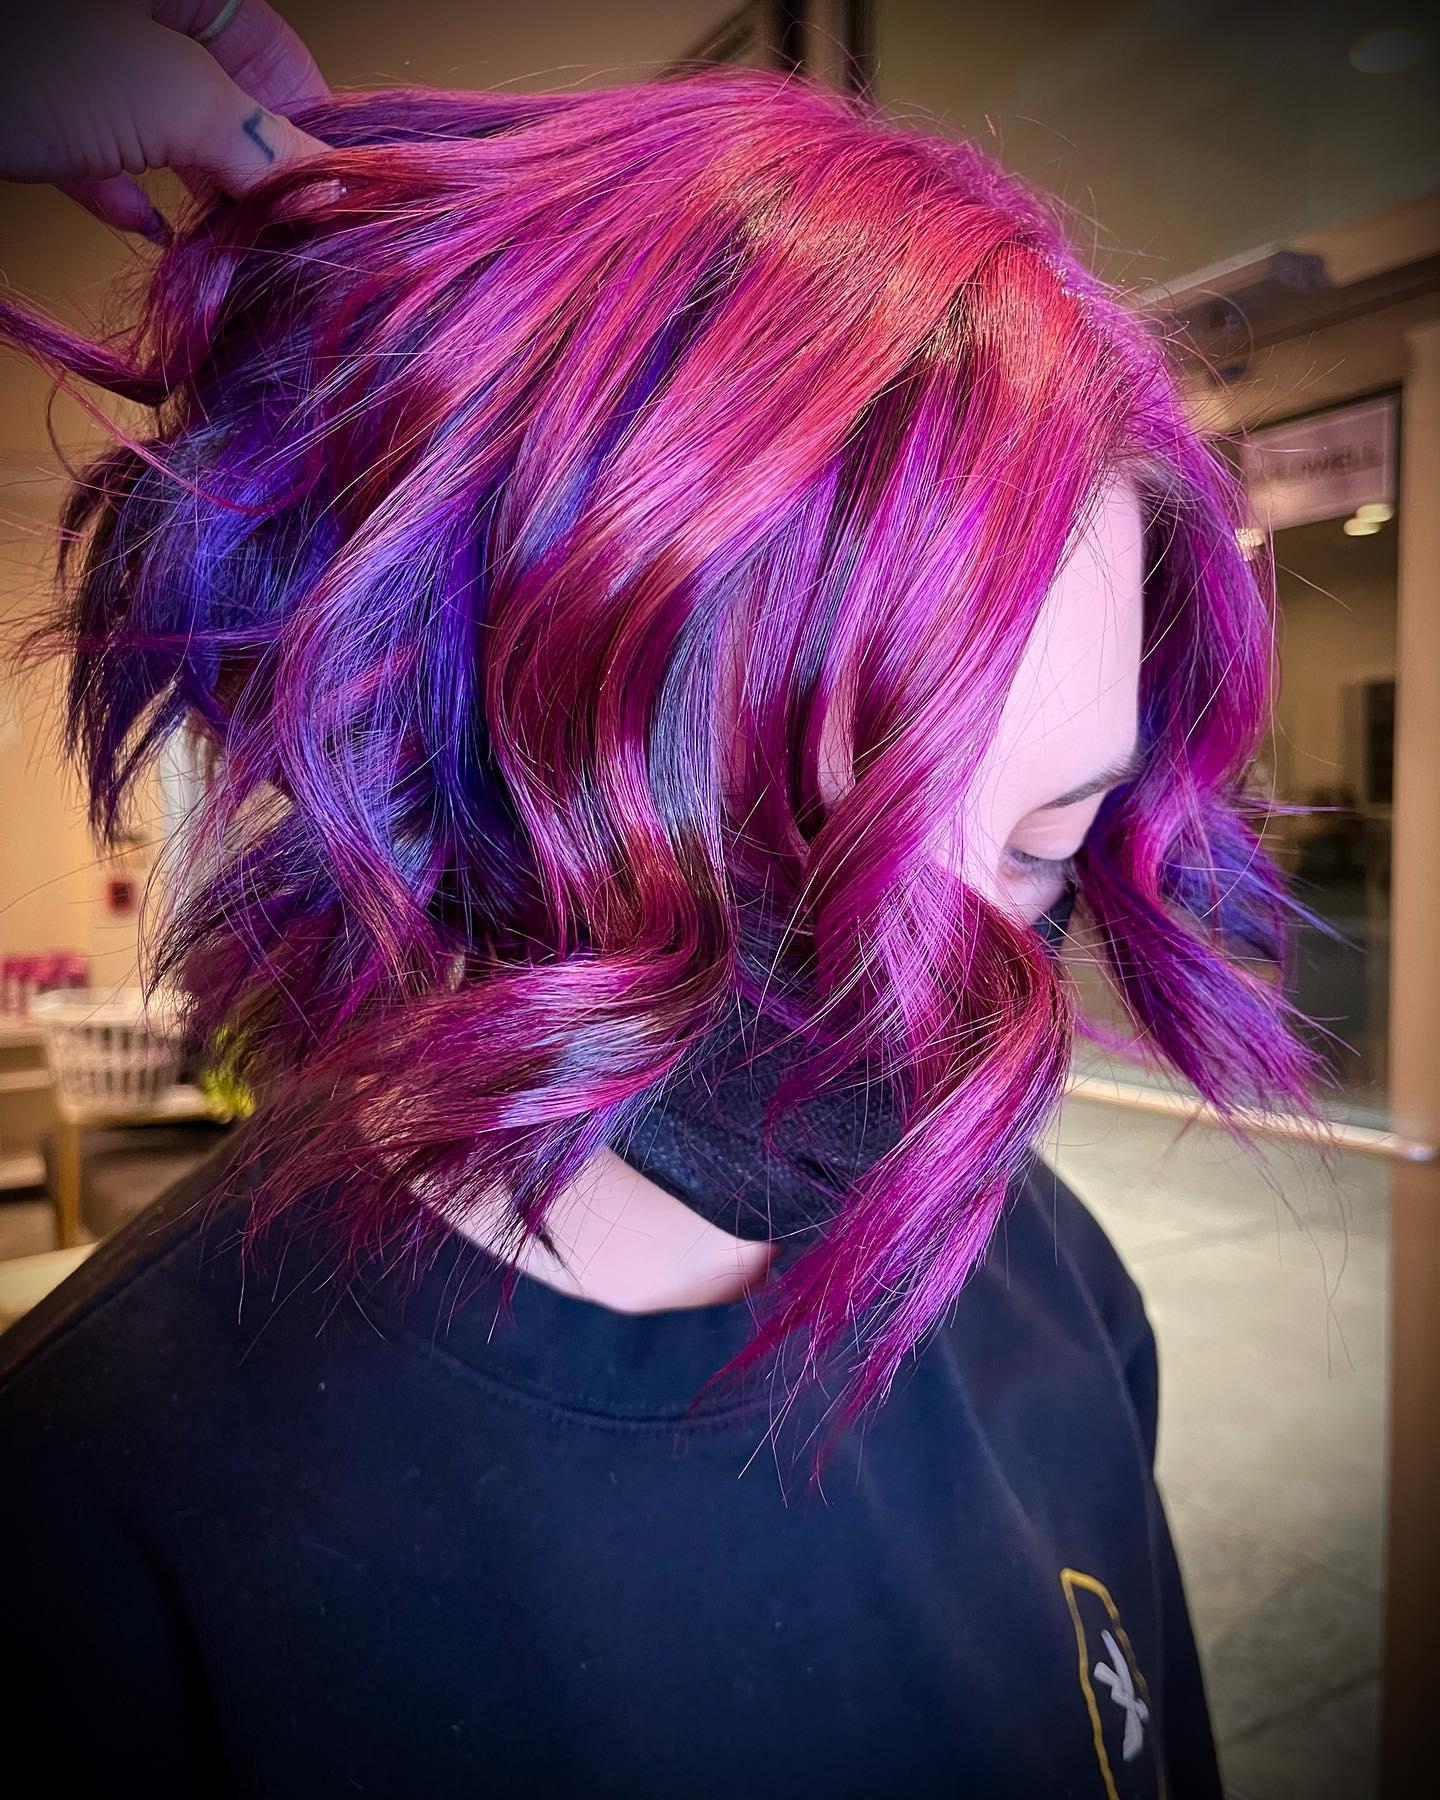 Bob-Haarschnitt mit rosa und lila Balayage